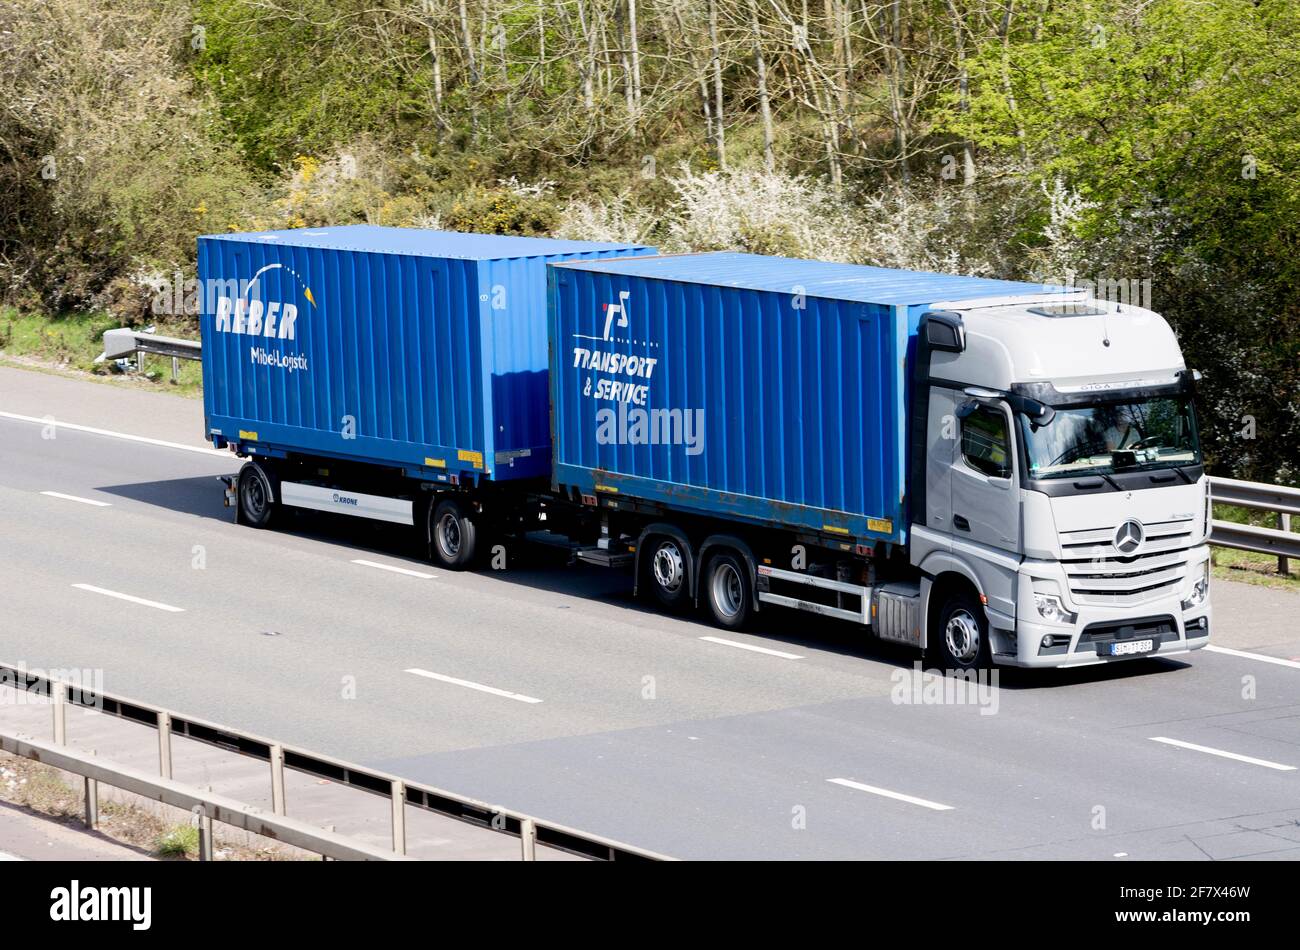 A Mercedes Reber lorry on the M40 motorway, Warwickshire, UK Stock Photo